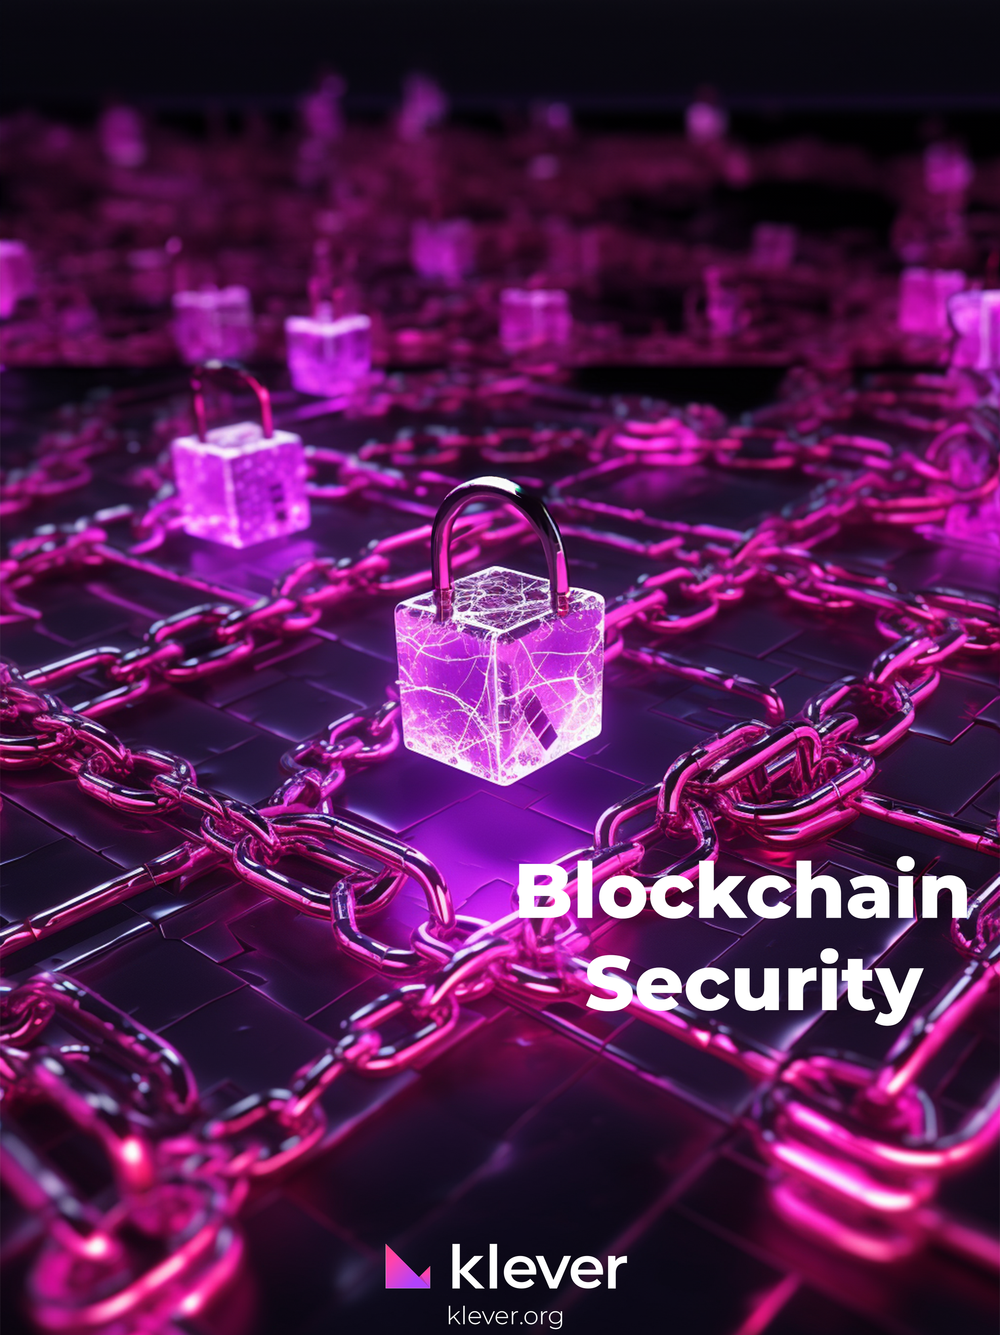 <img src="blockchain protection blockchain security.png" alt="">